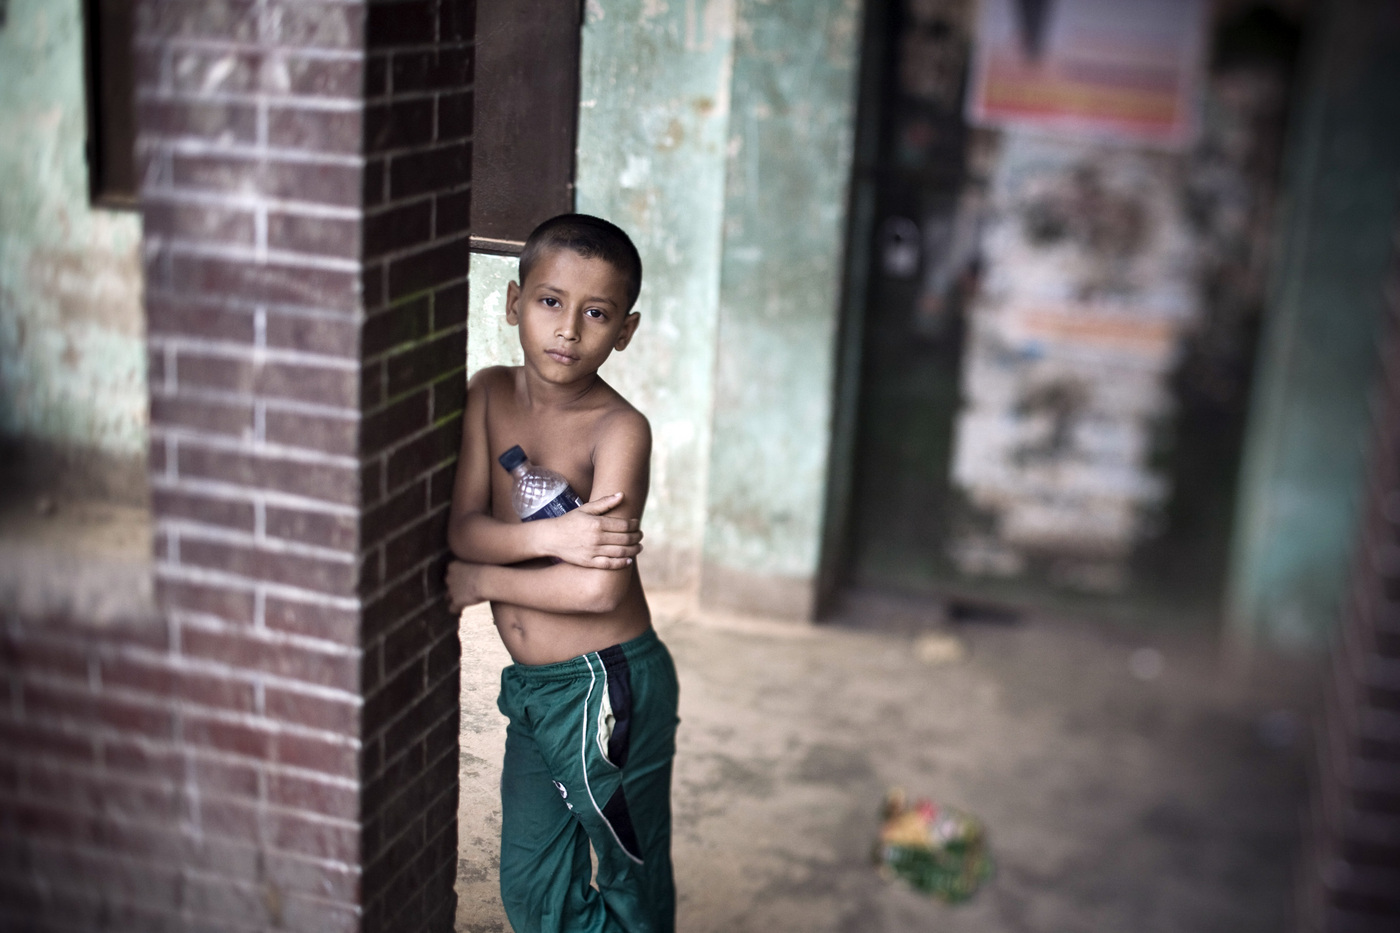 A young boy, Dhaka, Bangladesh : Encounters : David Burnett | Photographer